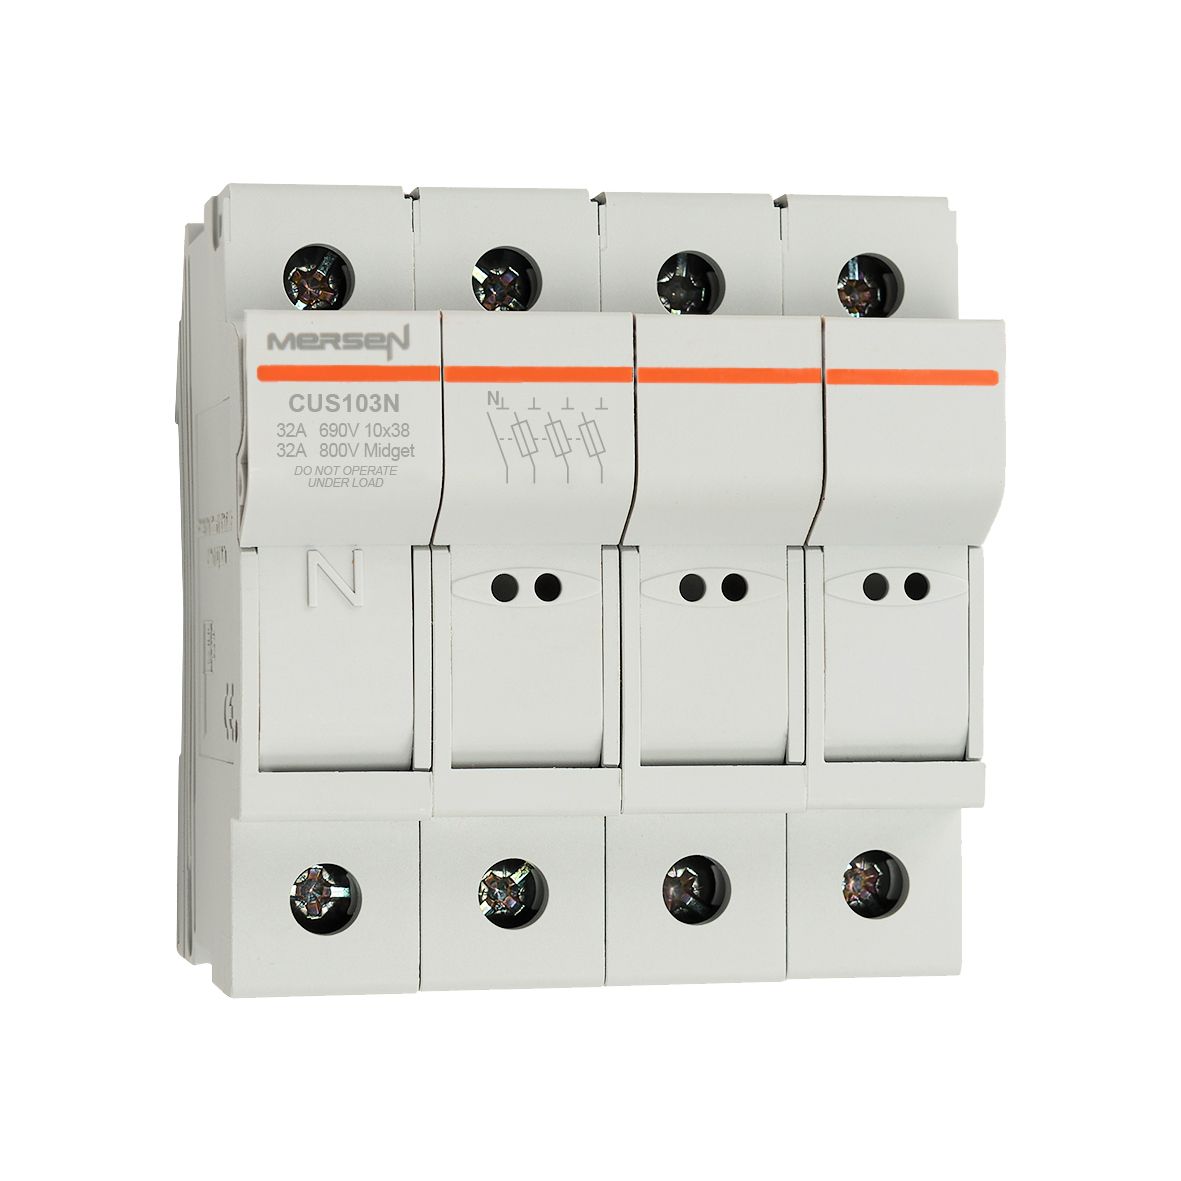 W1062711 - modular fuse holder, UL+IEC, 3P+N, 10x38, MIDGET, DIN rail mounting, IP20